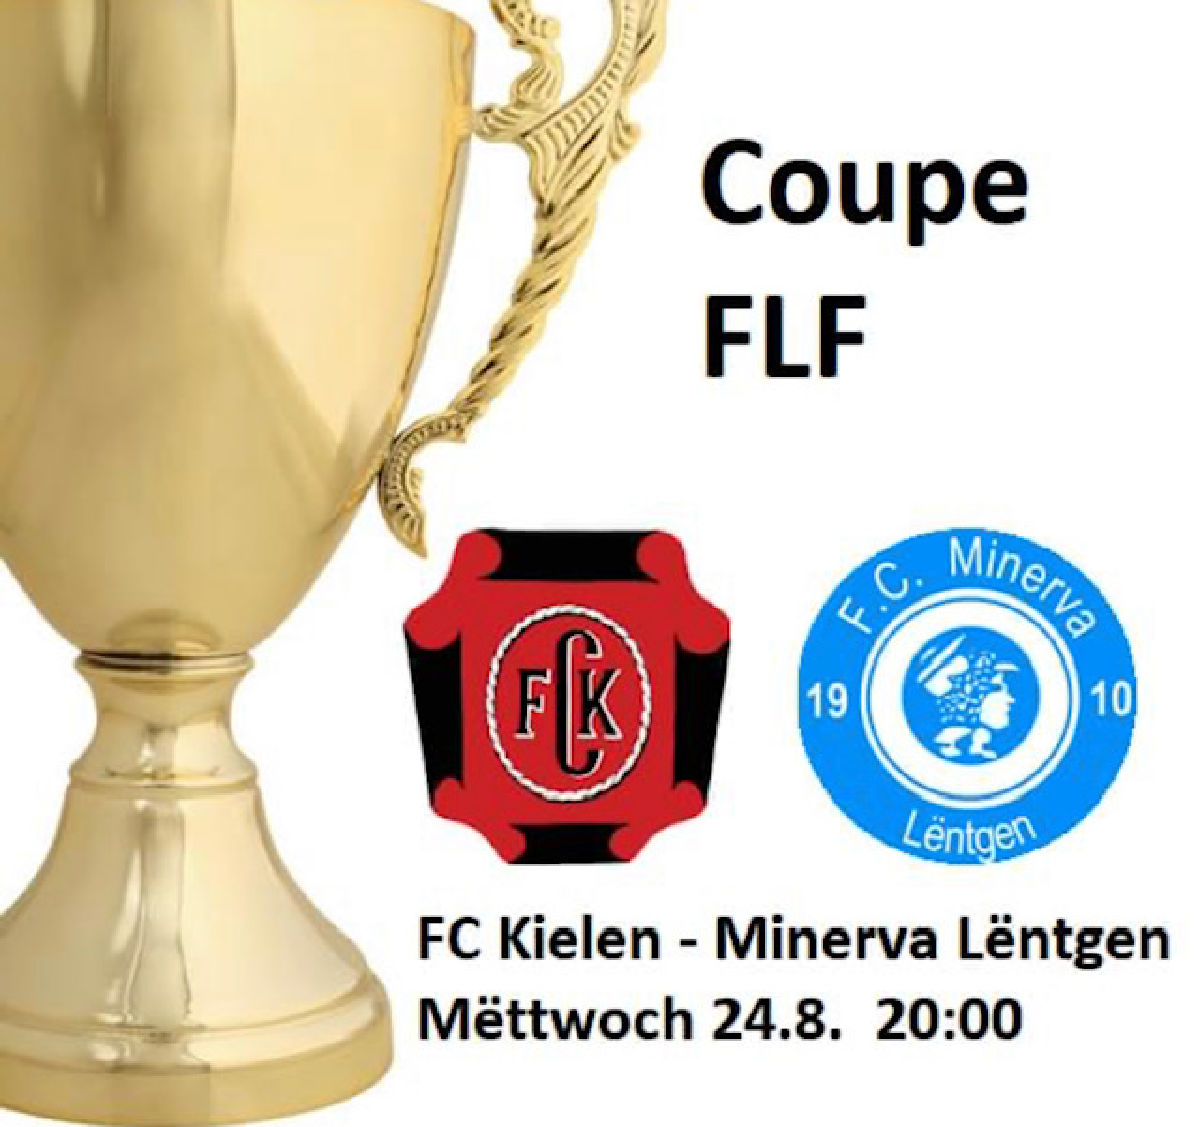 Coupe FLF Mëttwoch 20:00 Kielen - Lëntgen.